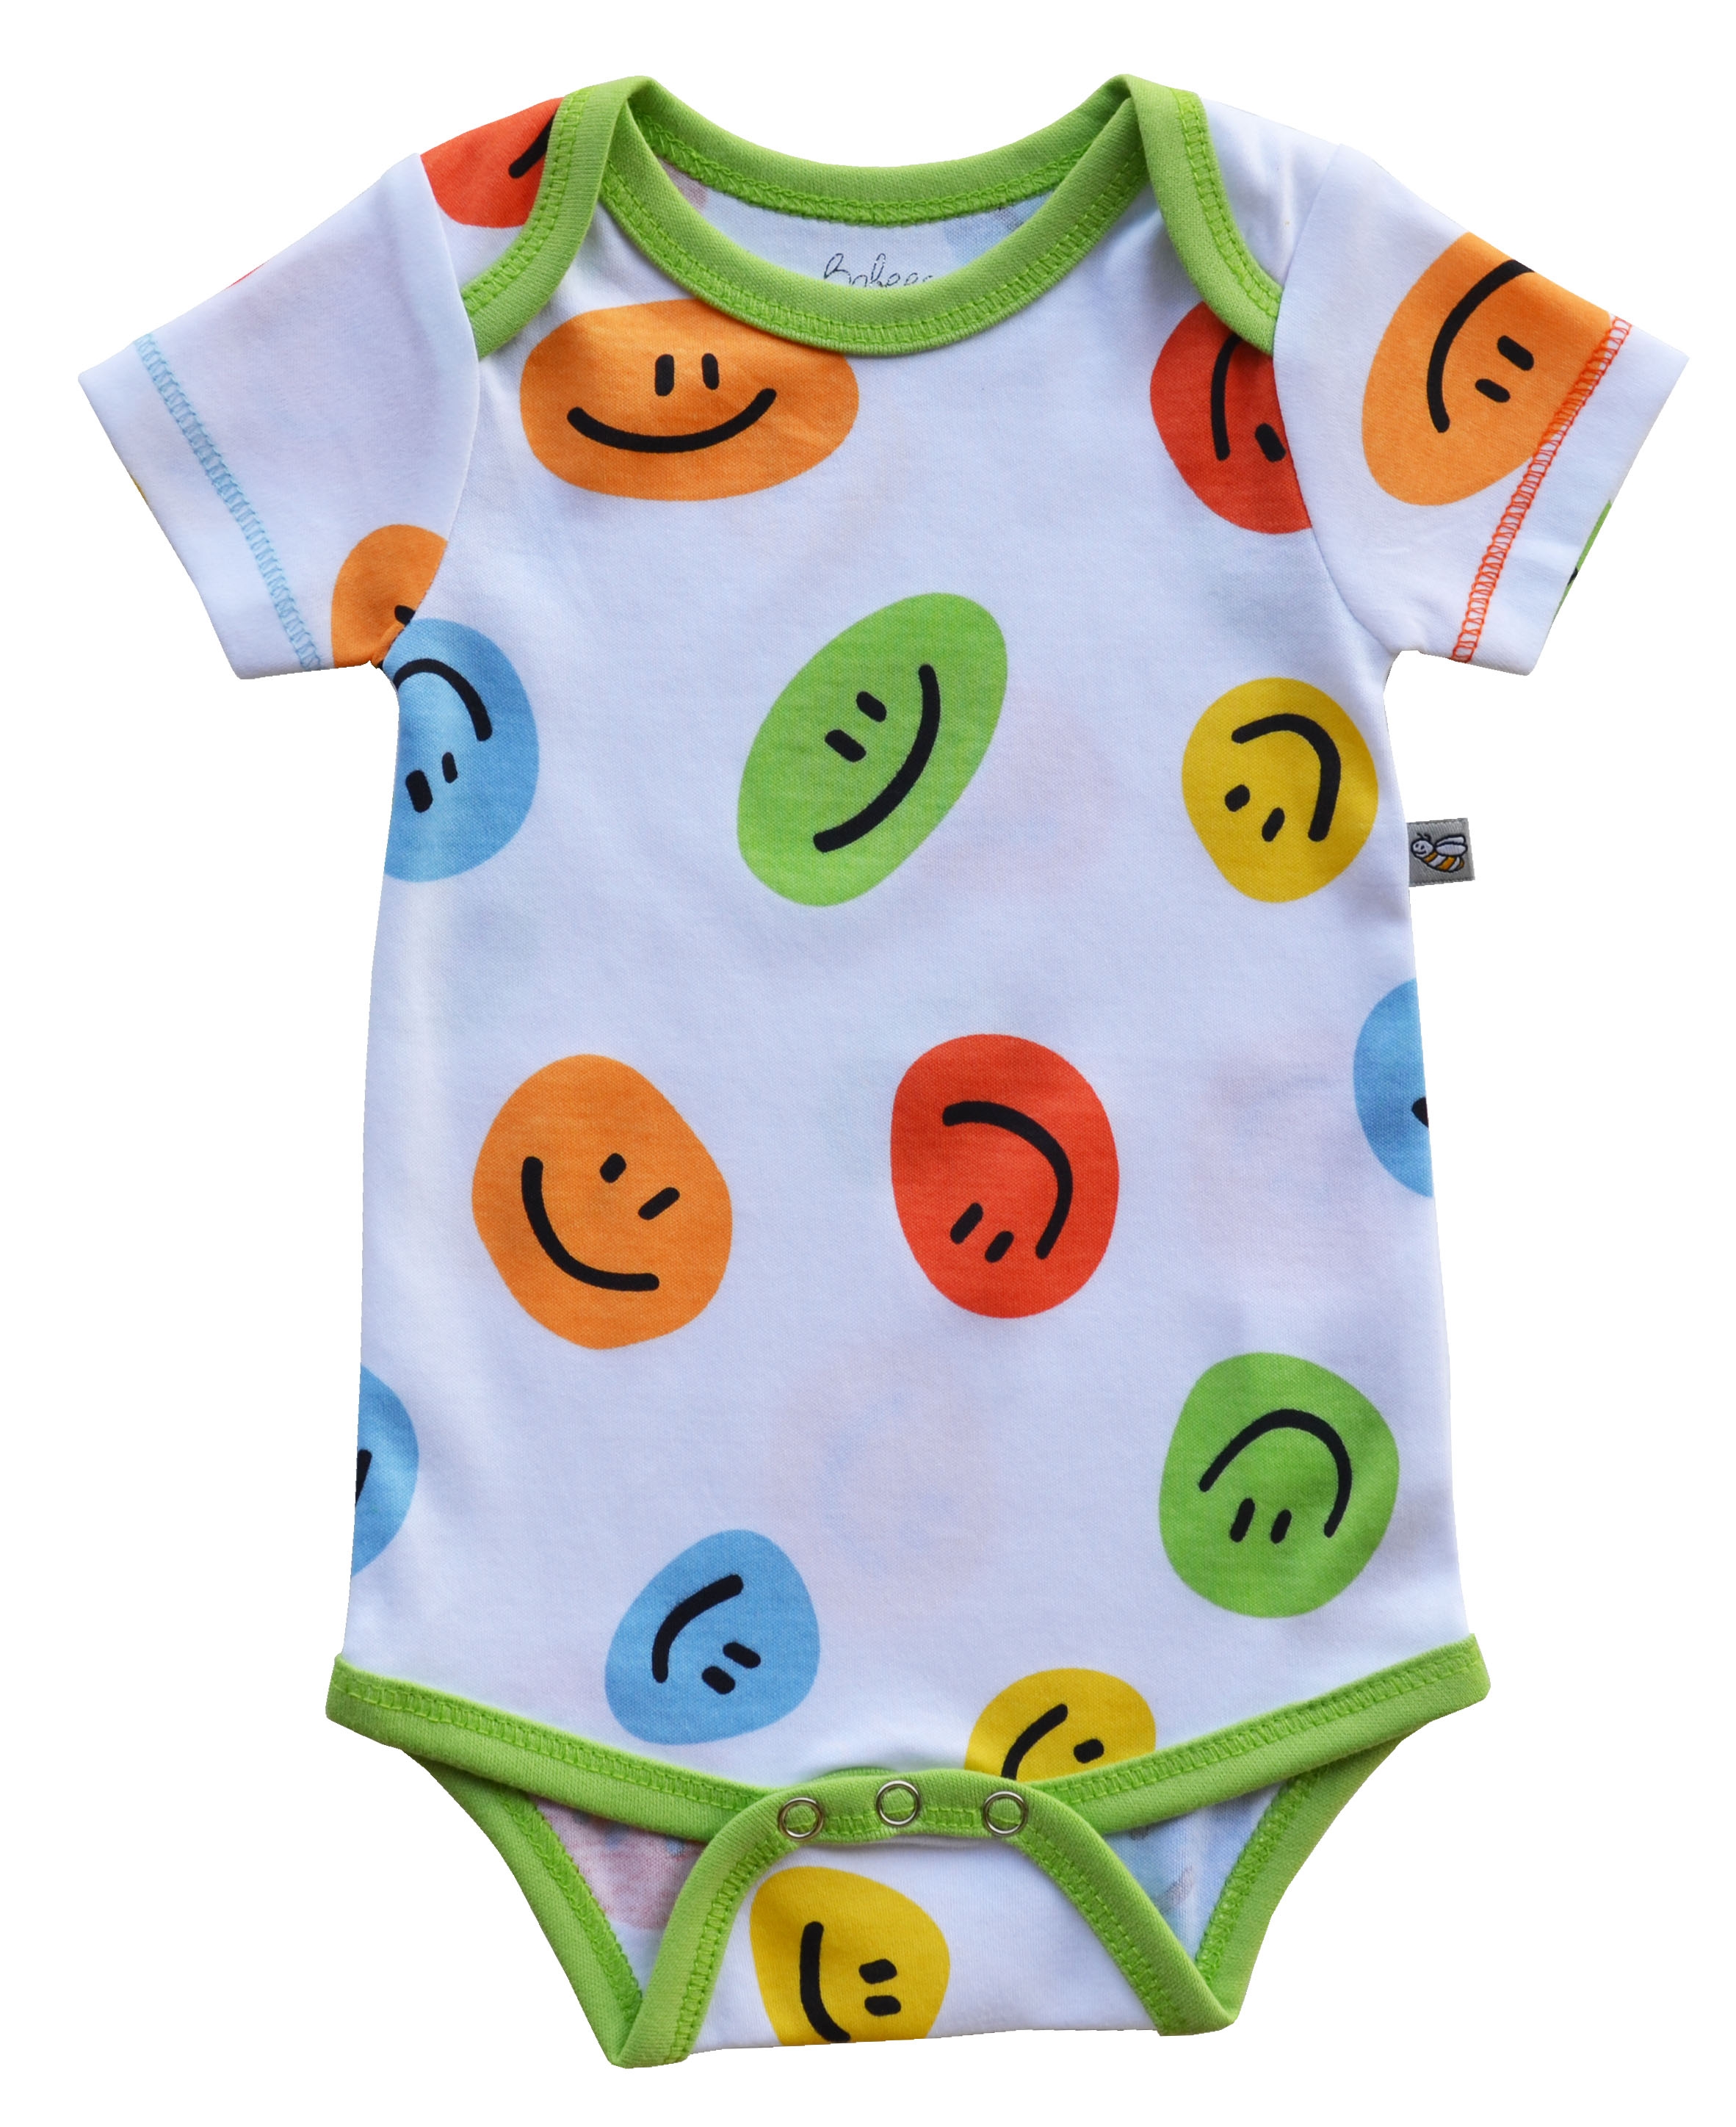 Smiley Printed baby Romper/Onesie(100% Cotton)